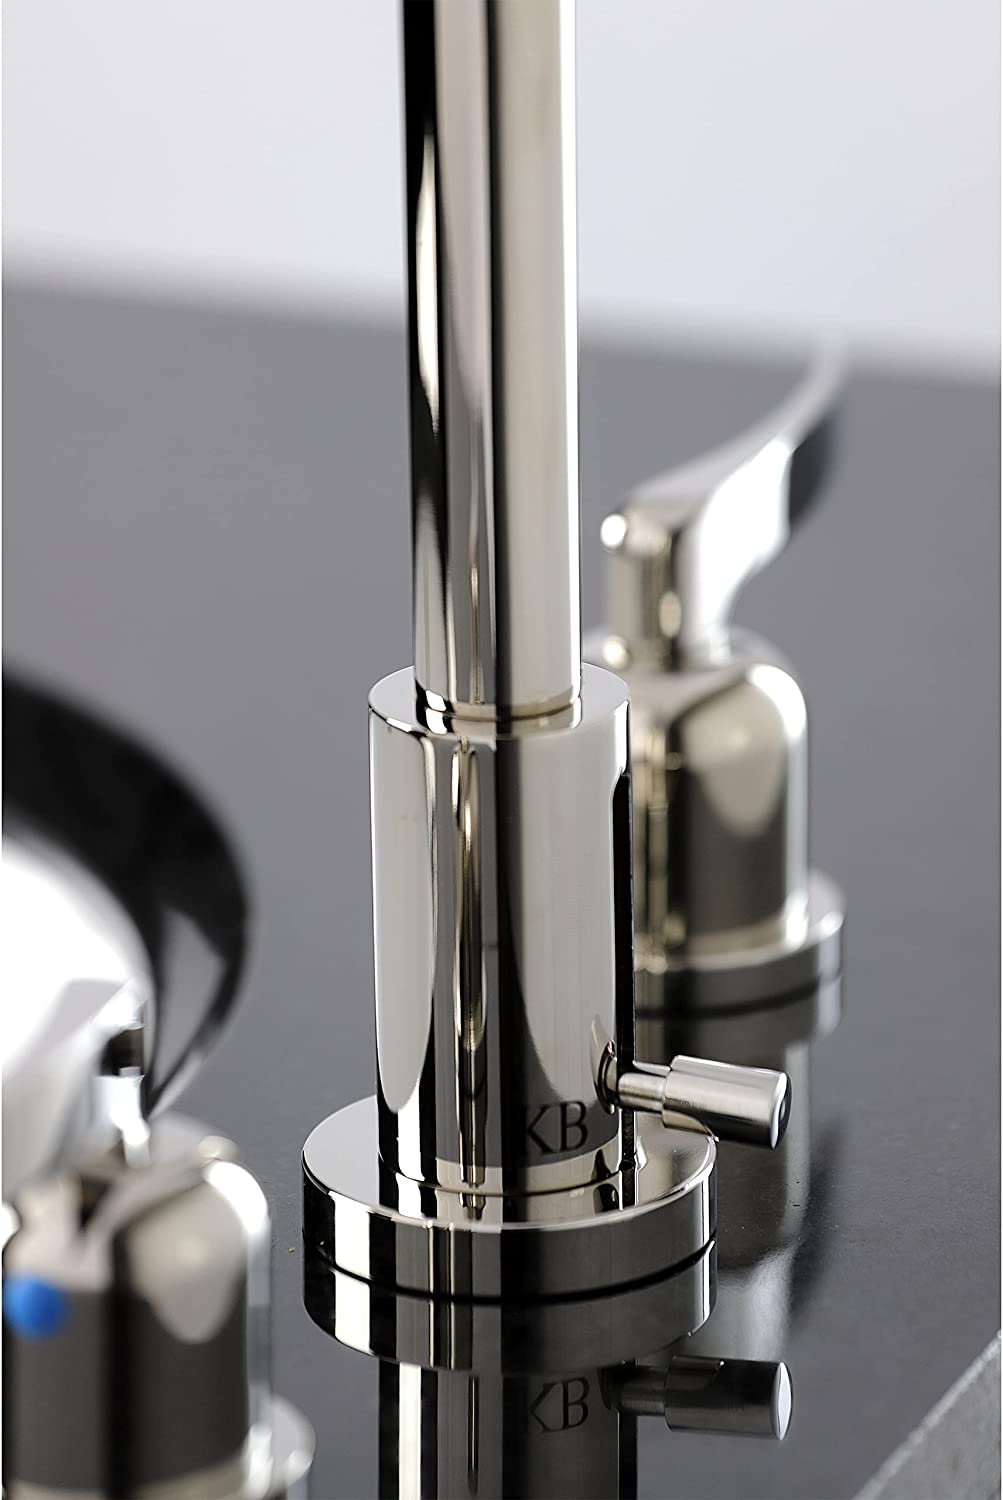 Kingston Brass FSC8929EFL Centurion Widespread Bathroom Faucet, 5-3/8 Inch in Spout Reach, Polished Nickel